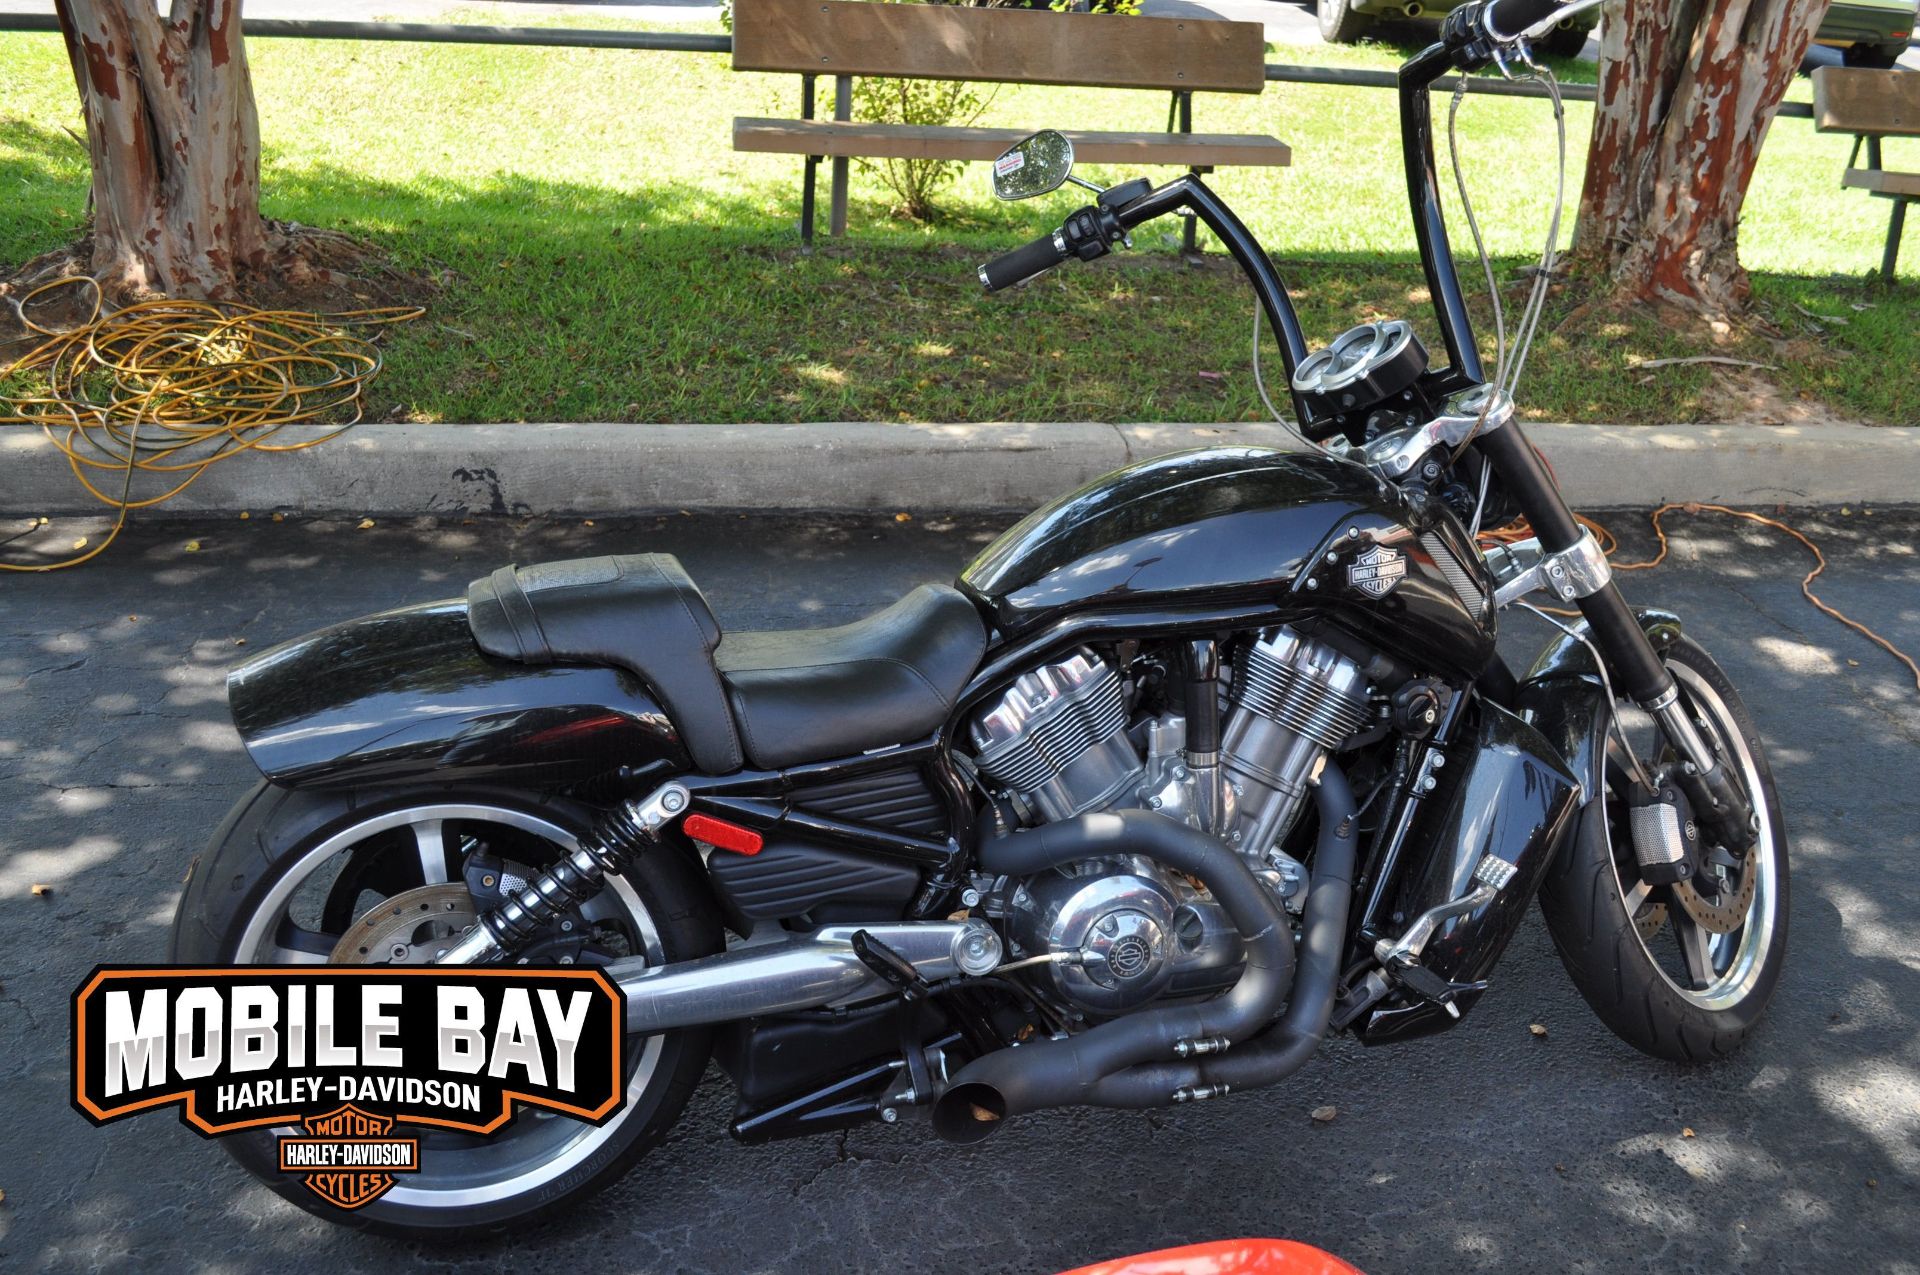 2013 Harley-Davidson V-Rod Muscle® in Mobile, Alabama - Photo 2